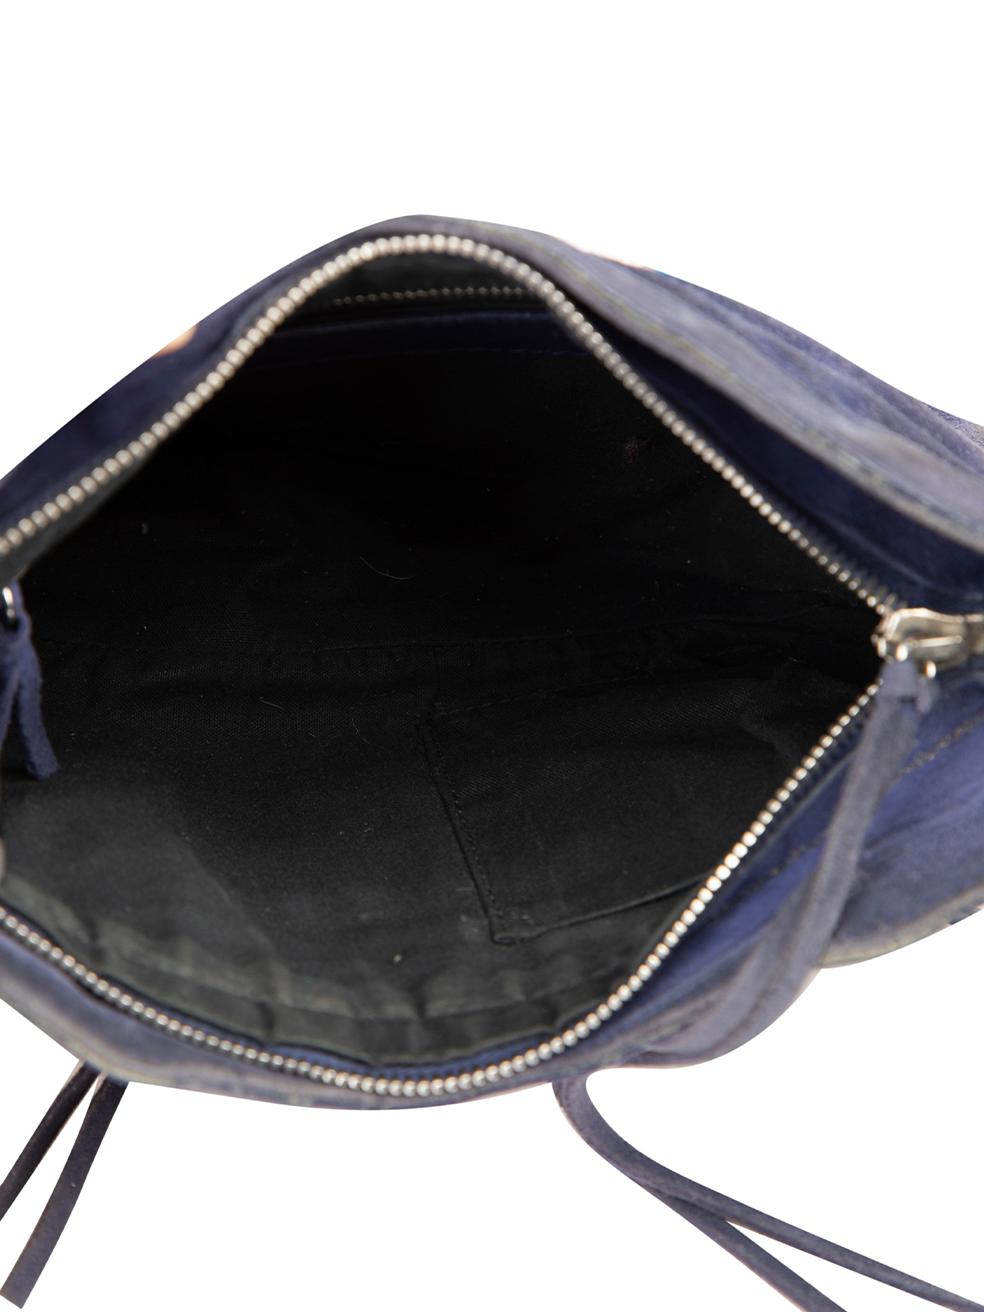 Balenciaga Women's Purple Suede Crossbody Bag For Sale 2